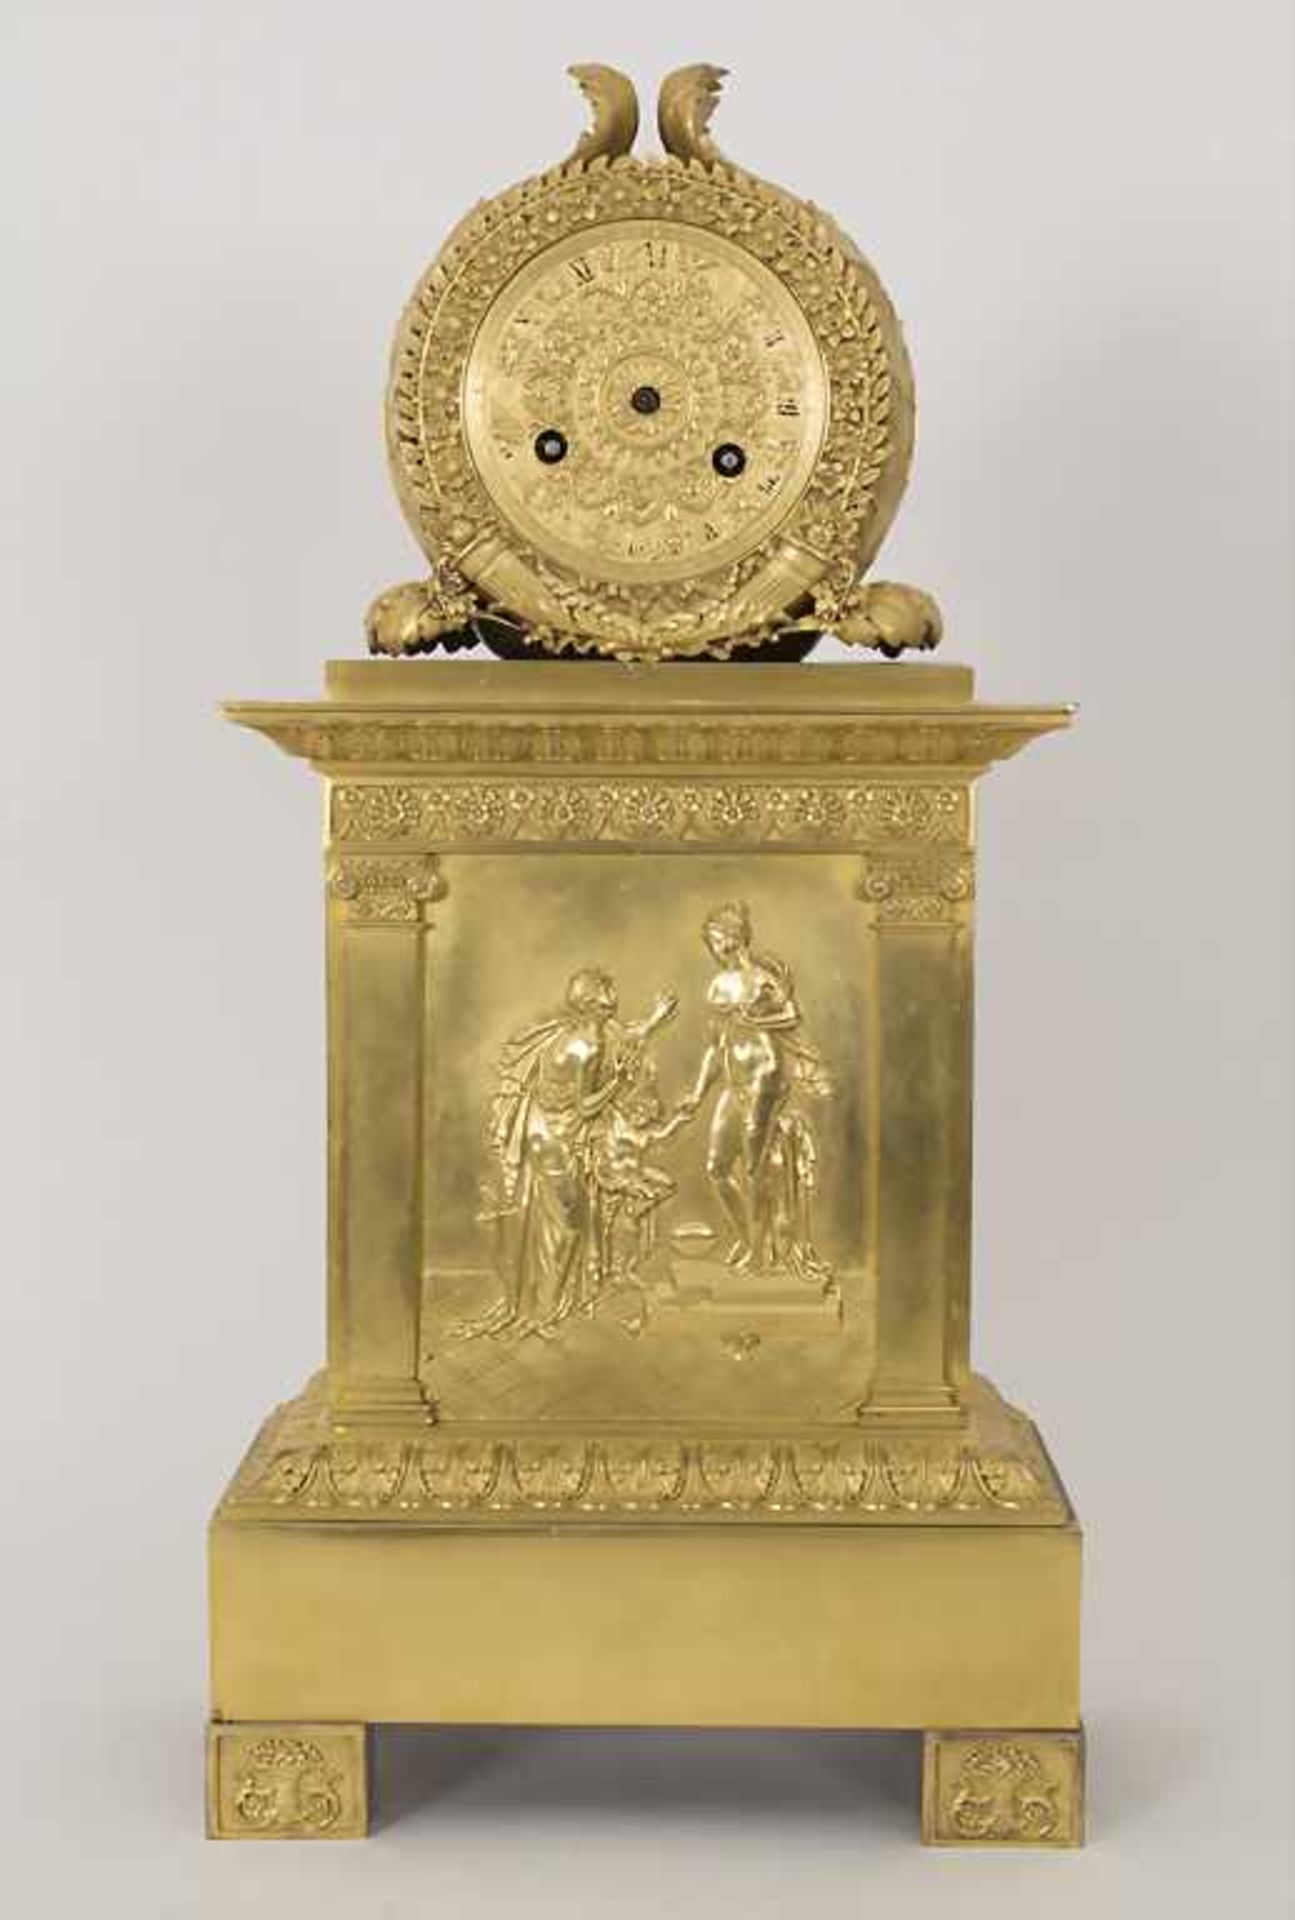 Empire Pendule 'Die Künste' / An Empire clock 'The fine arts', Paris, um 1800<